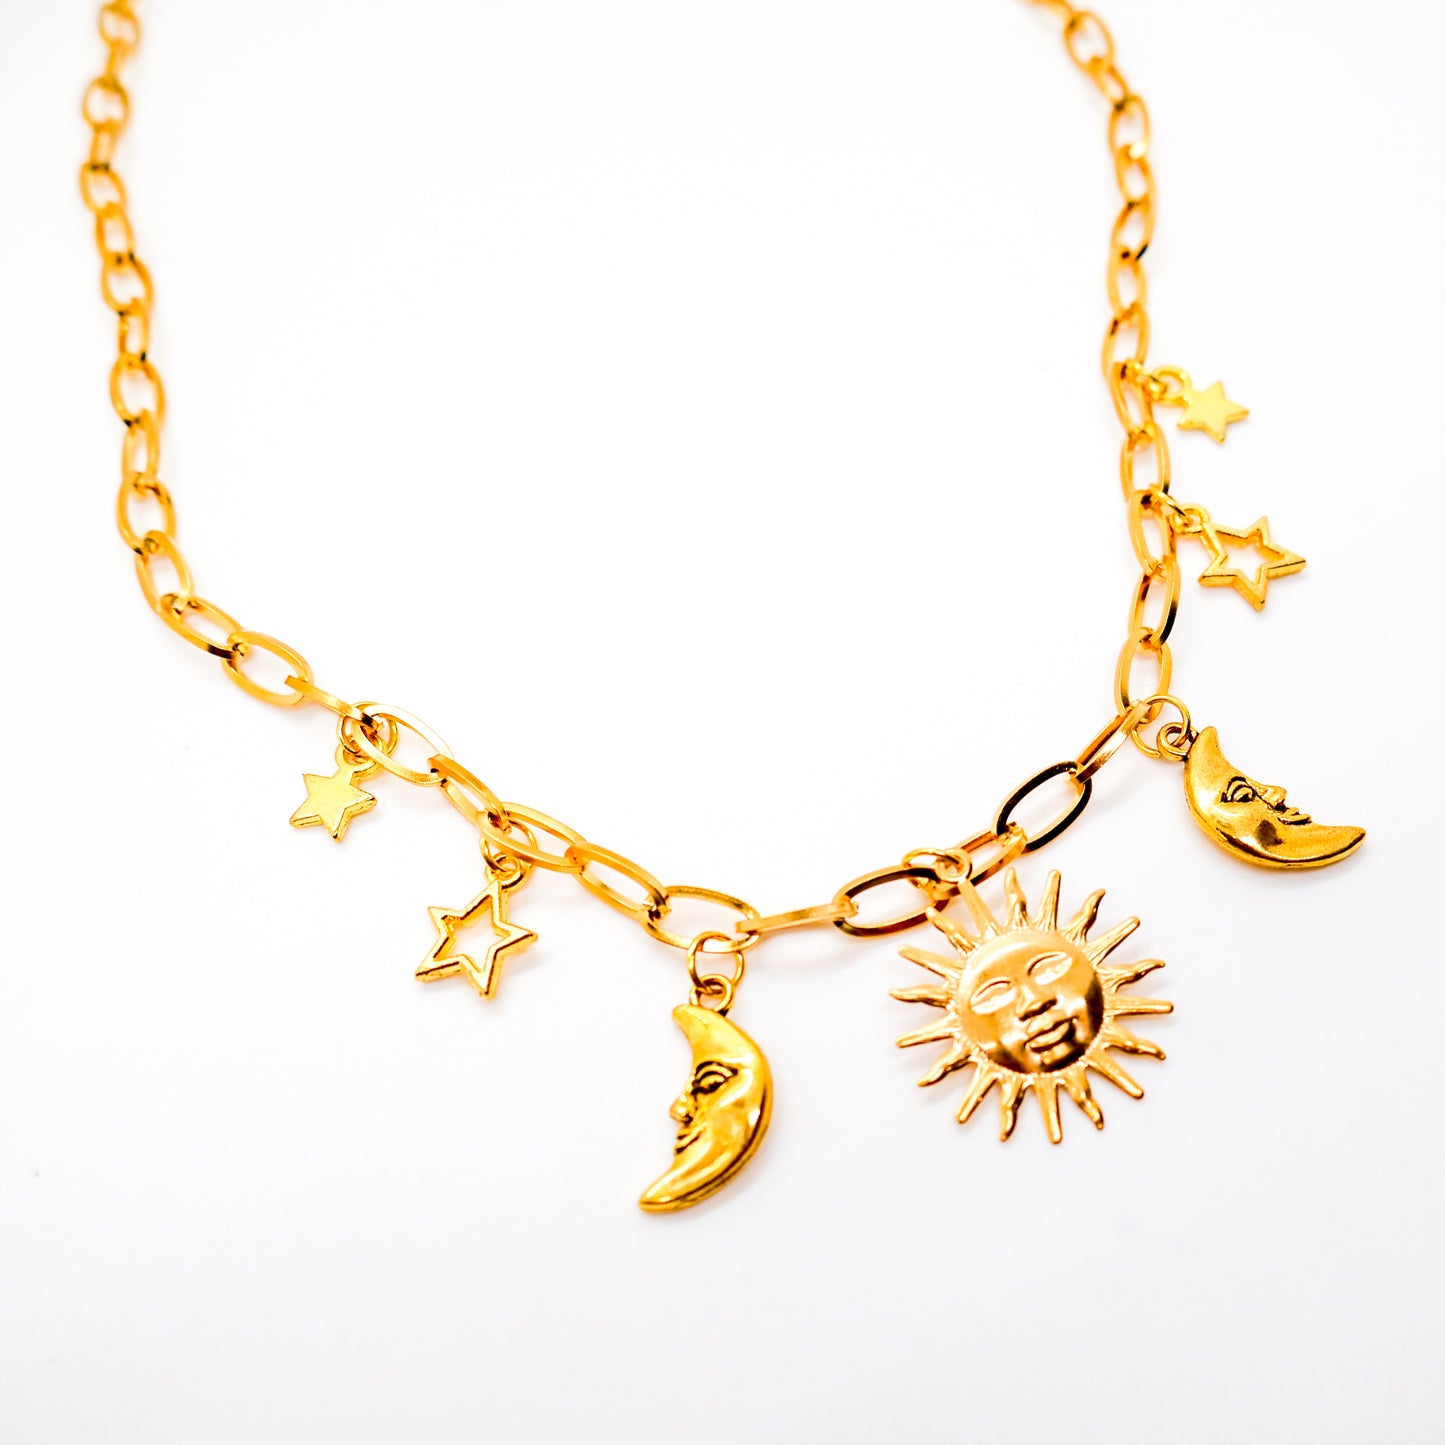 Celestial Charm Necklace